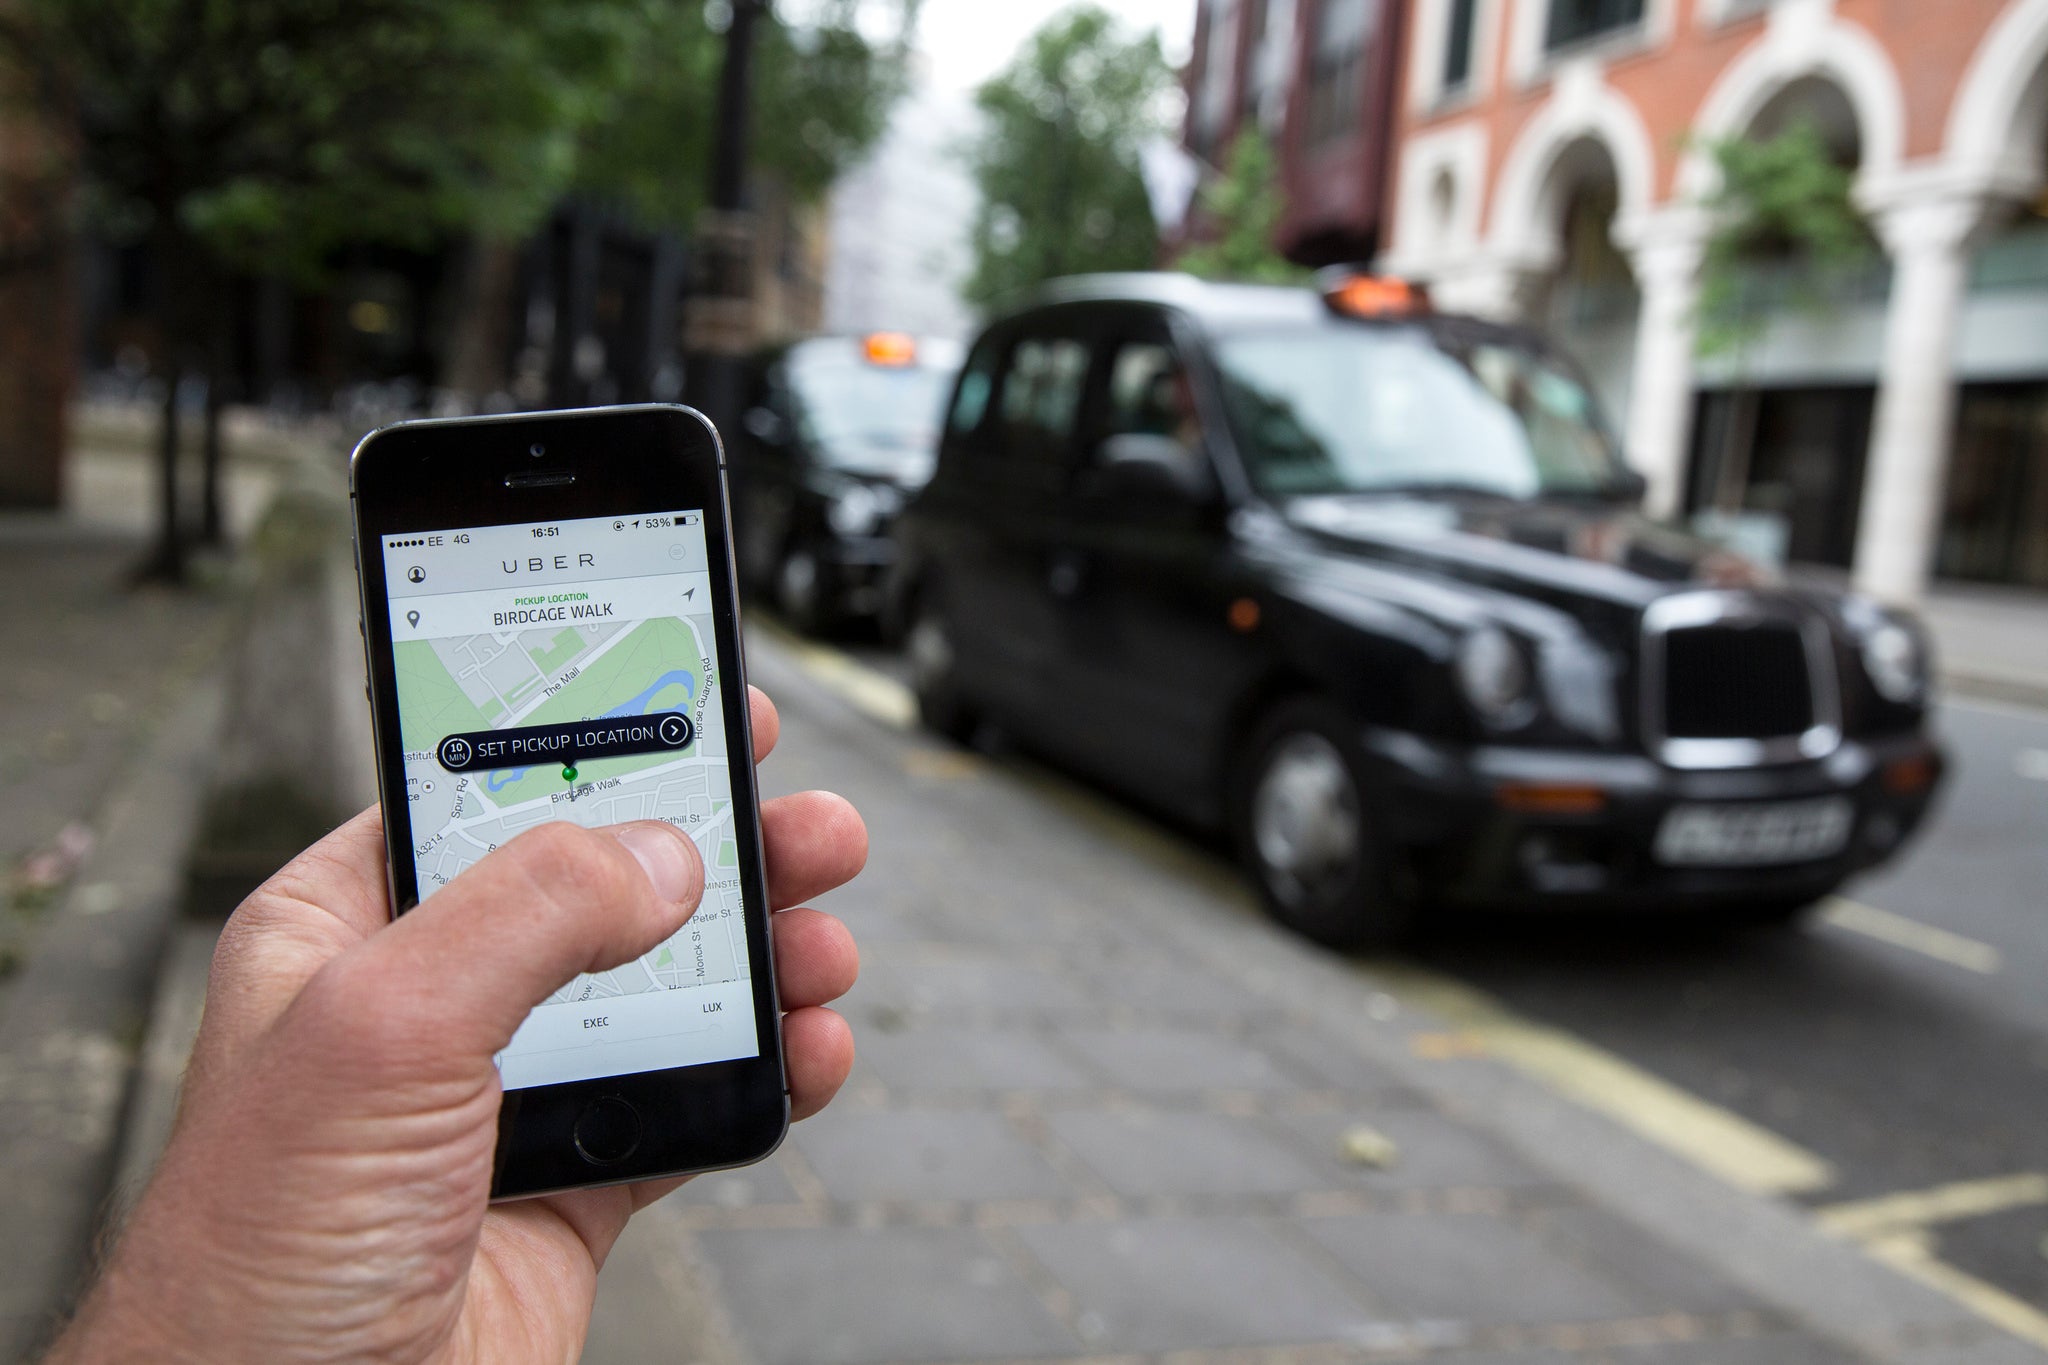 Uber should stick to sending taxis, animal charities said